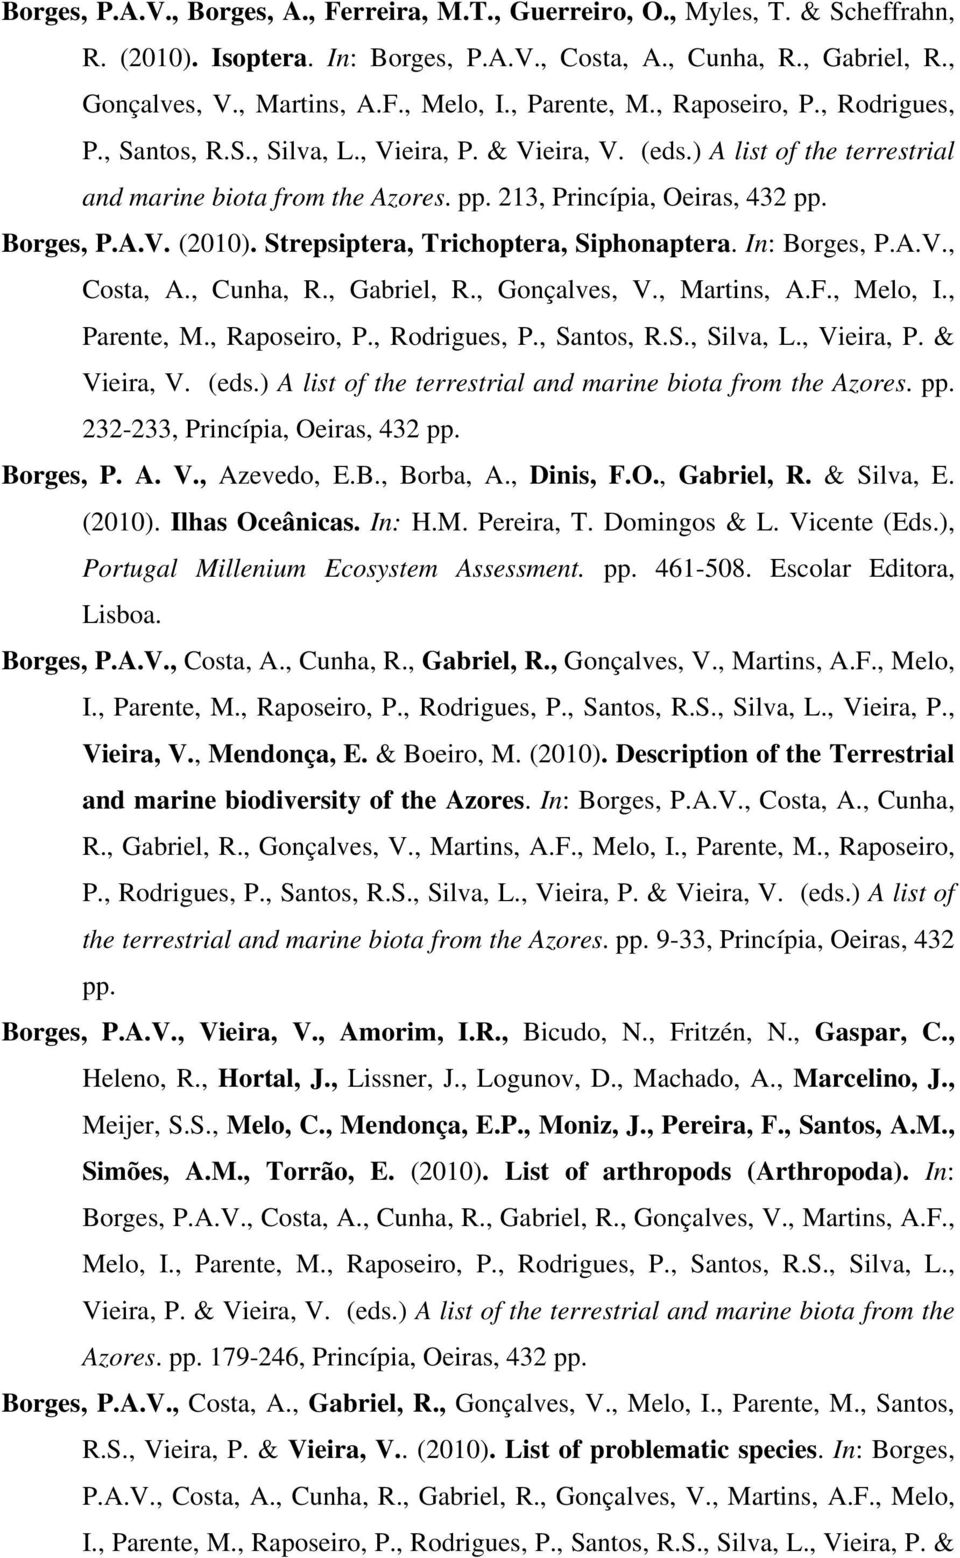 Borges, P.A.V. (2010). Strepsiptera, Trichoptera, Siphonaptera. In: Borges, P.A.V., Costa, A., Cunha, R., Gabriel, R., Gonçalves, V., Martins, A.F., Melo, I., Parente, M., Raposeiro, P., Rodrigues, P.